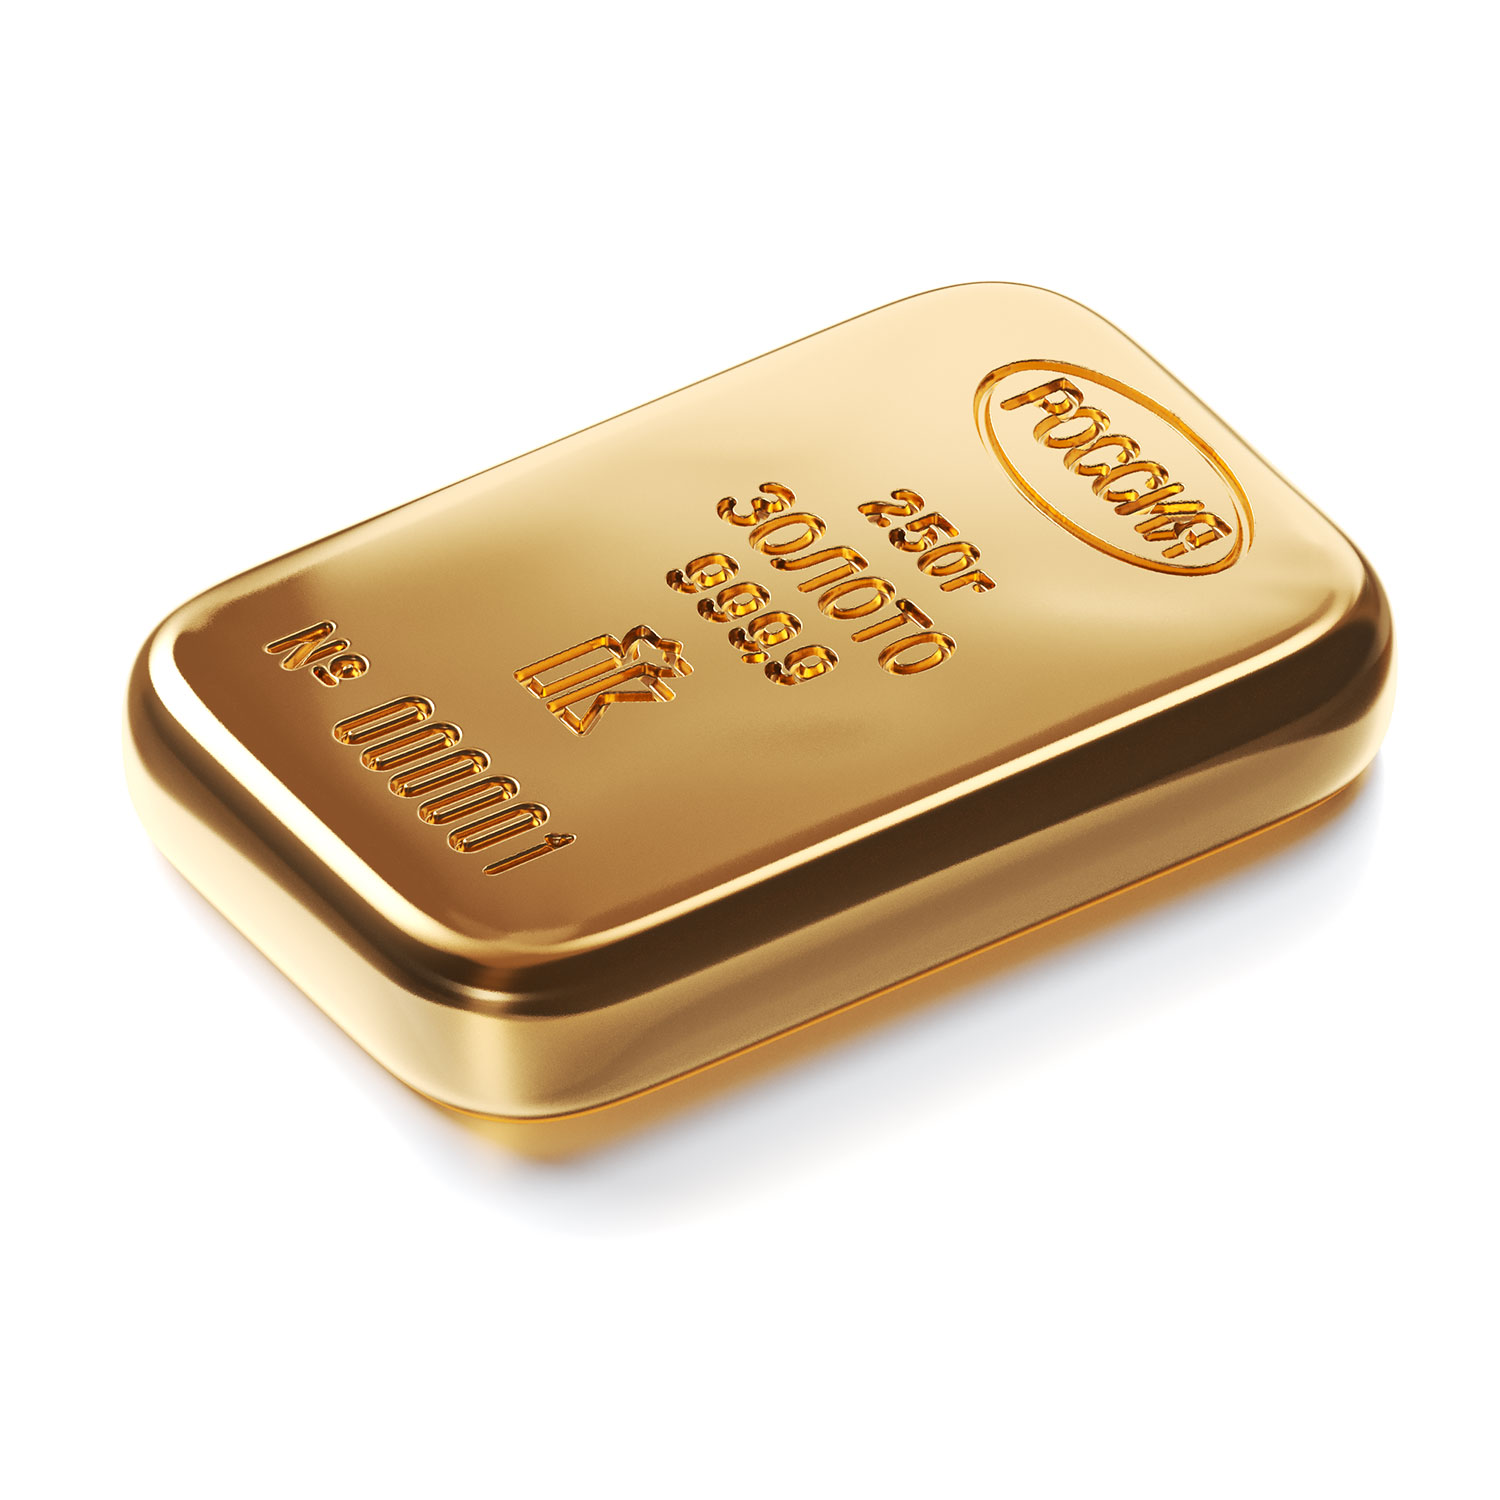 Грамм золота цена слиток